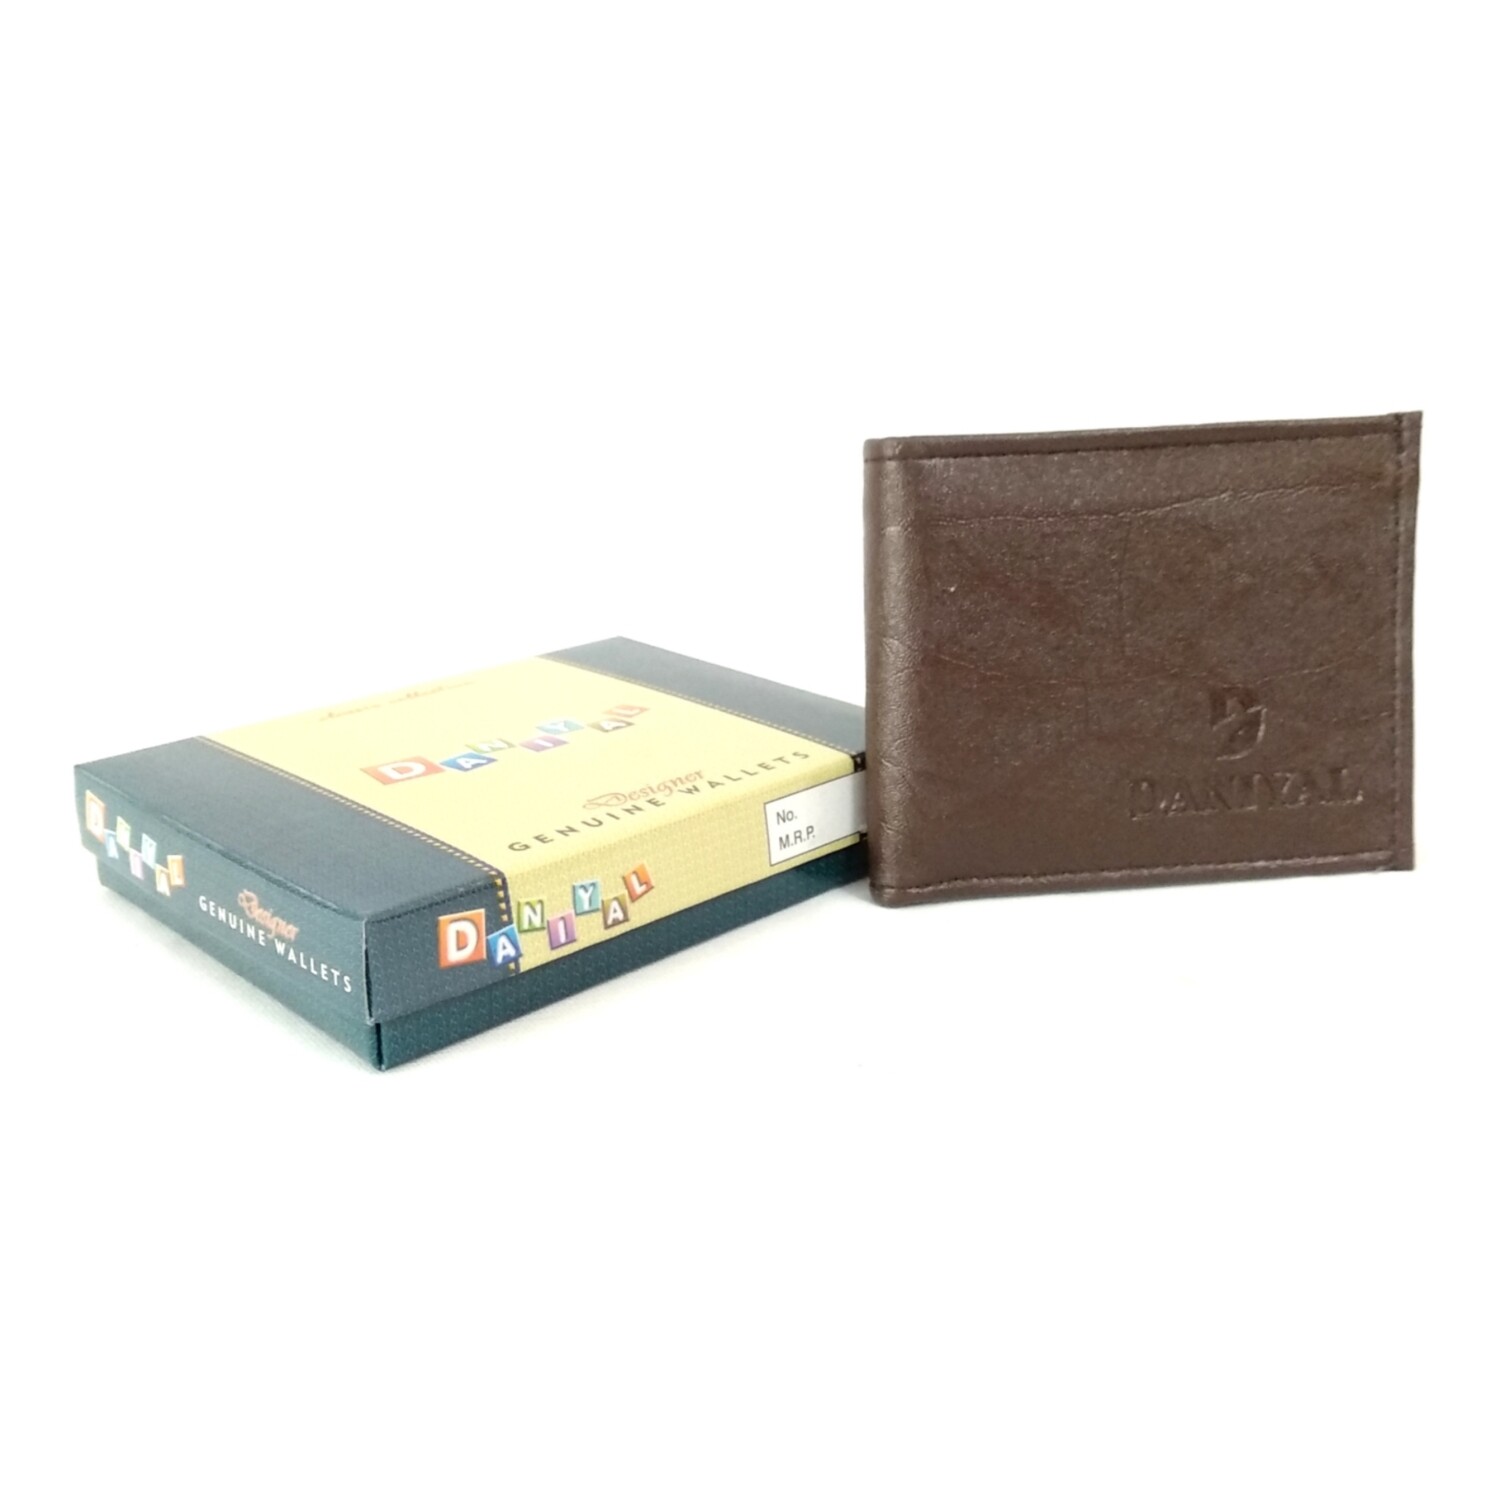 Daniyal Leather Designer Genuine Wallet For Men - Random Colour (Dark Brown/Brown)